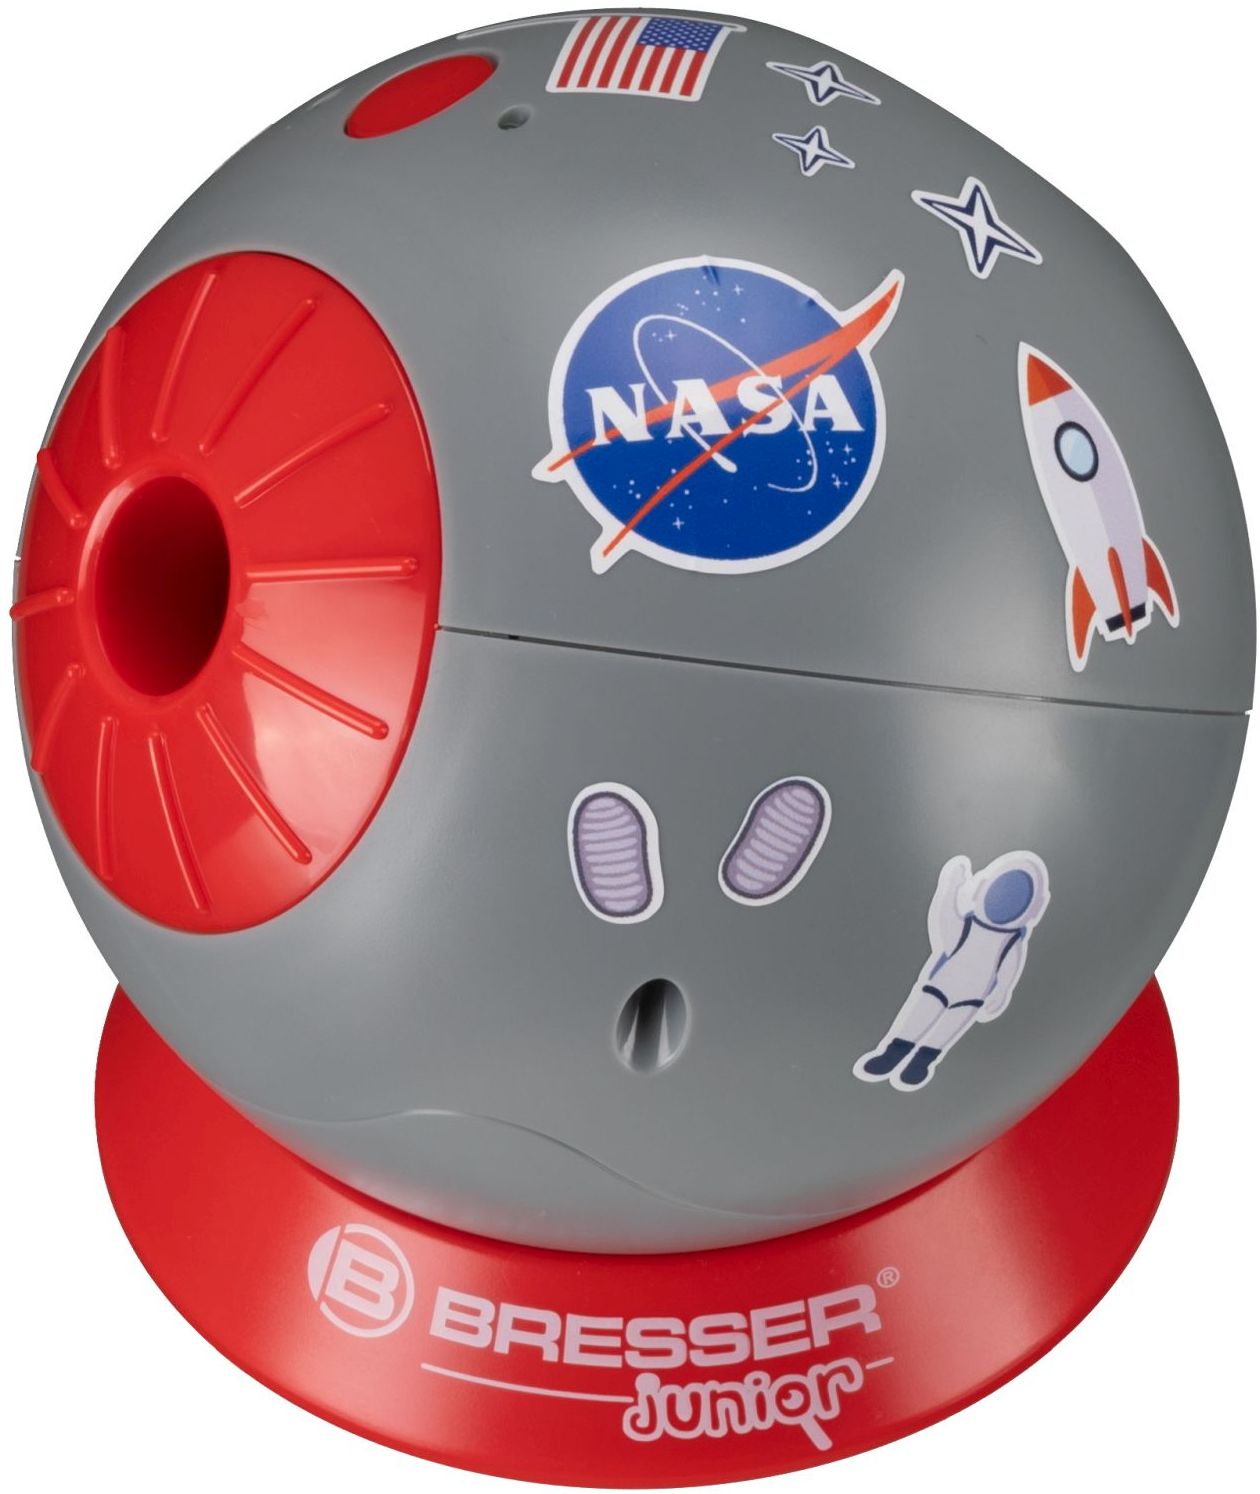 Bresser ISA Space Exploration NASA Weltraum-Projektor